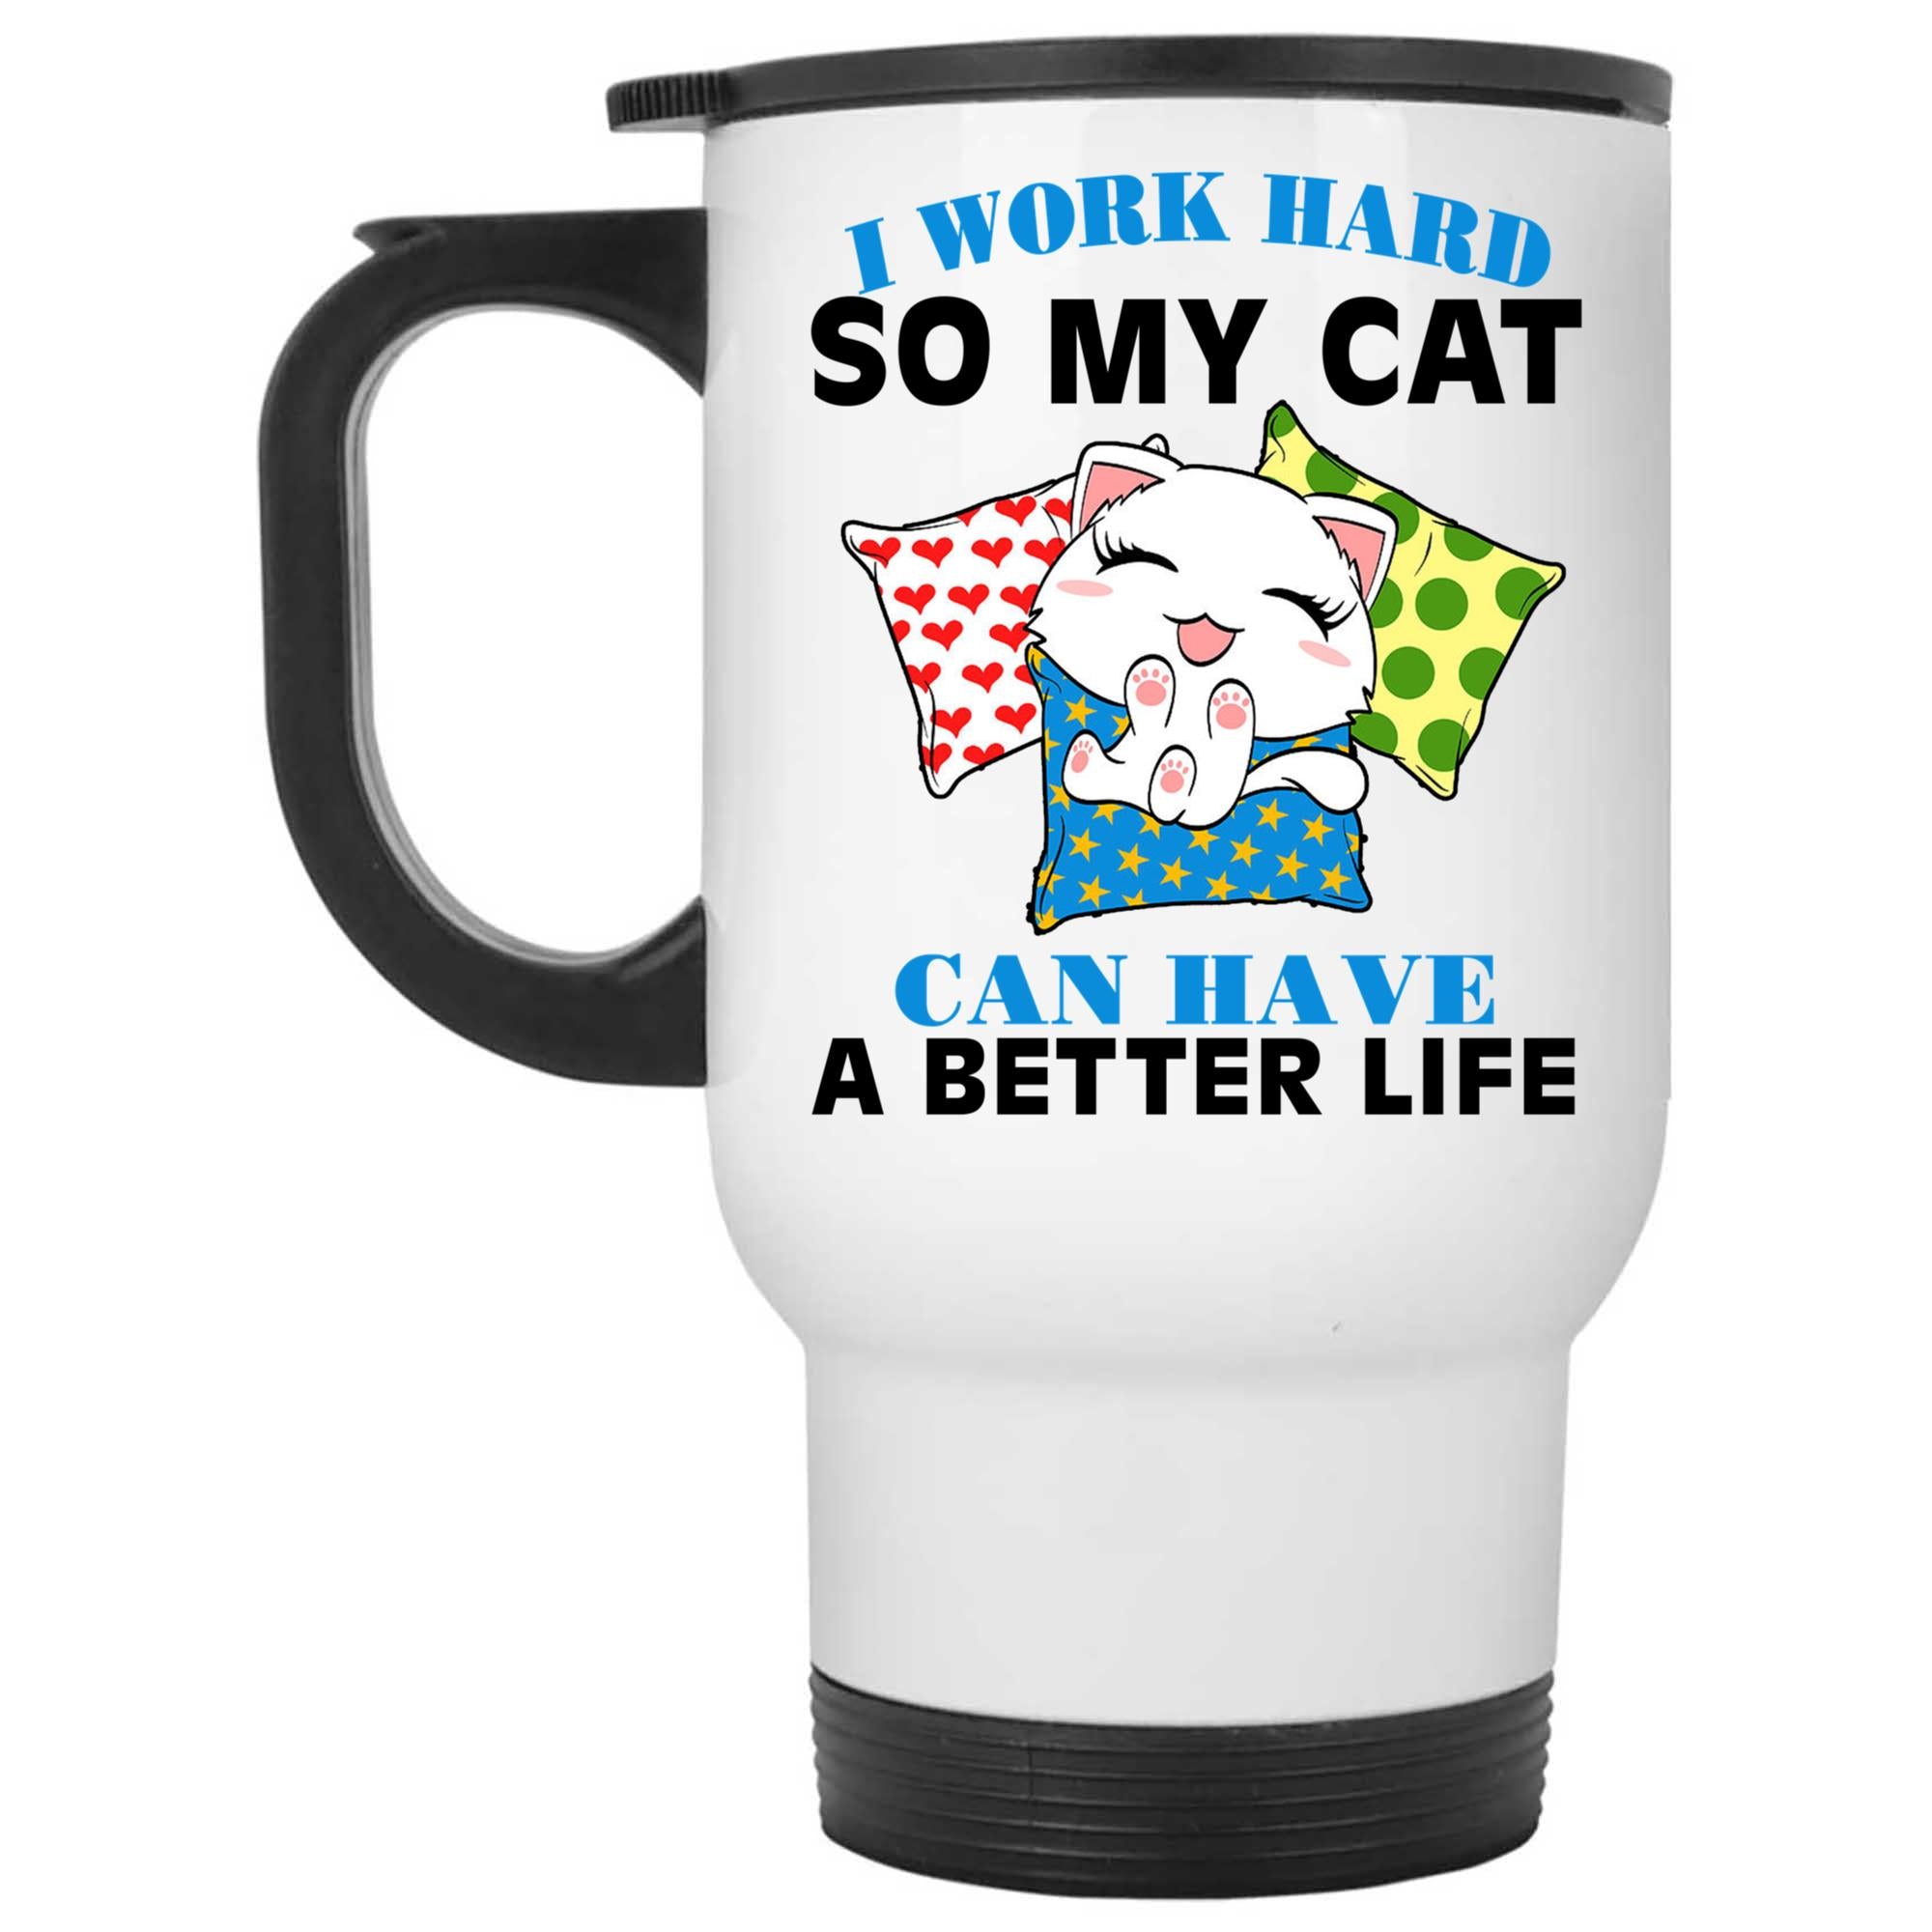 Skitongifts Coffee Mug Funny Ceramic Novelty I Work Hard So My Cat Can